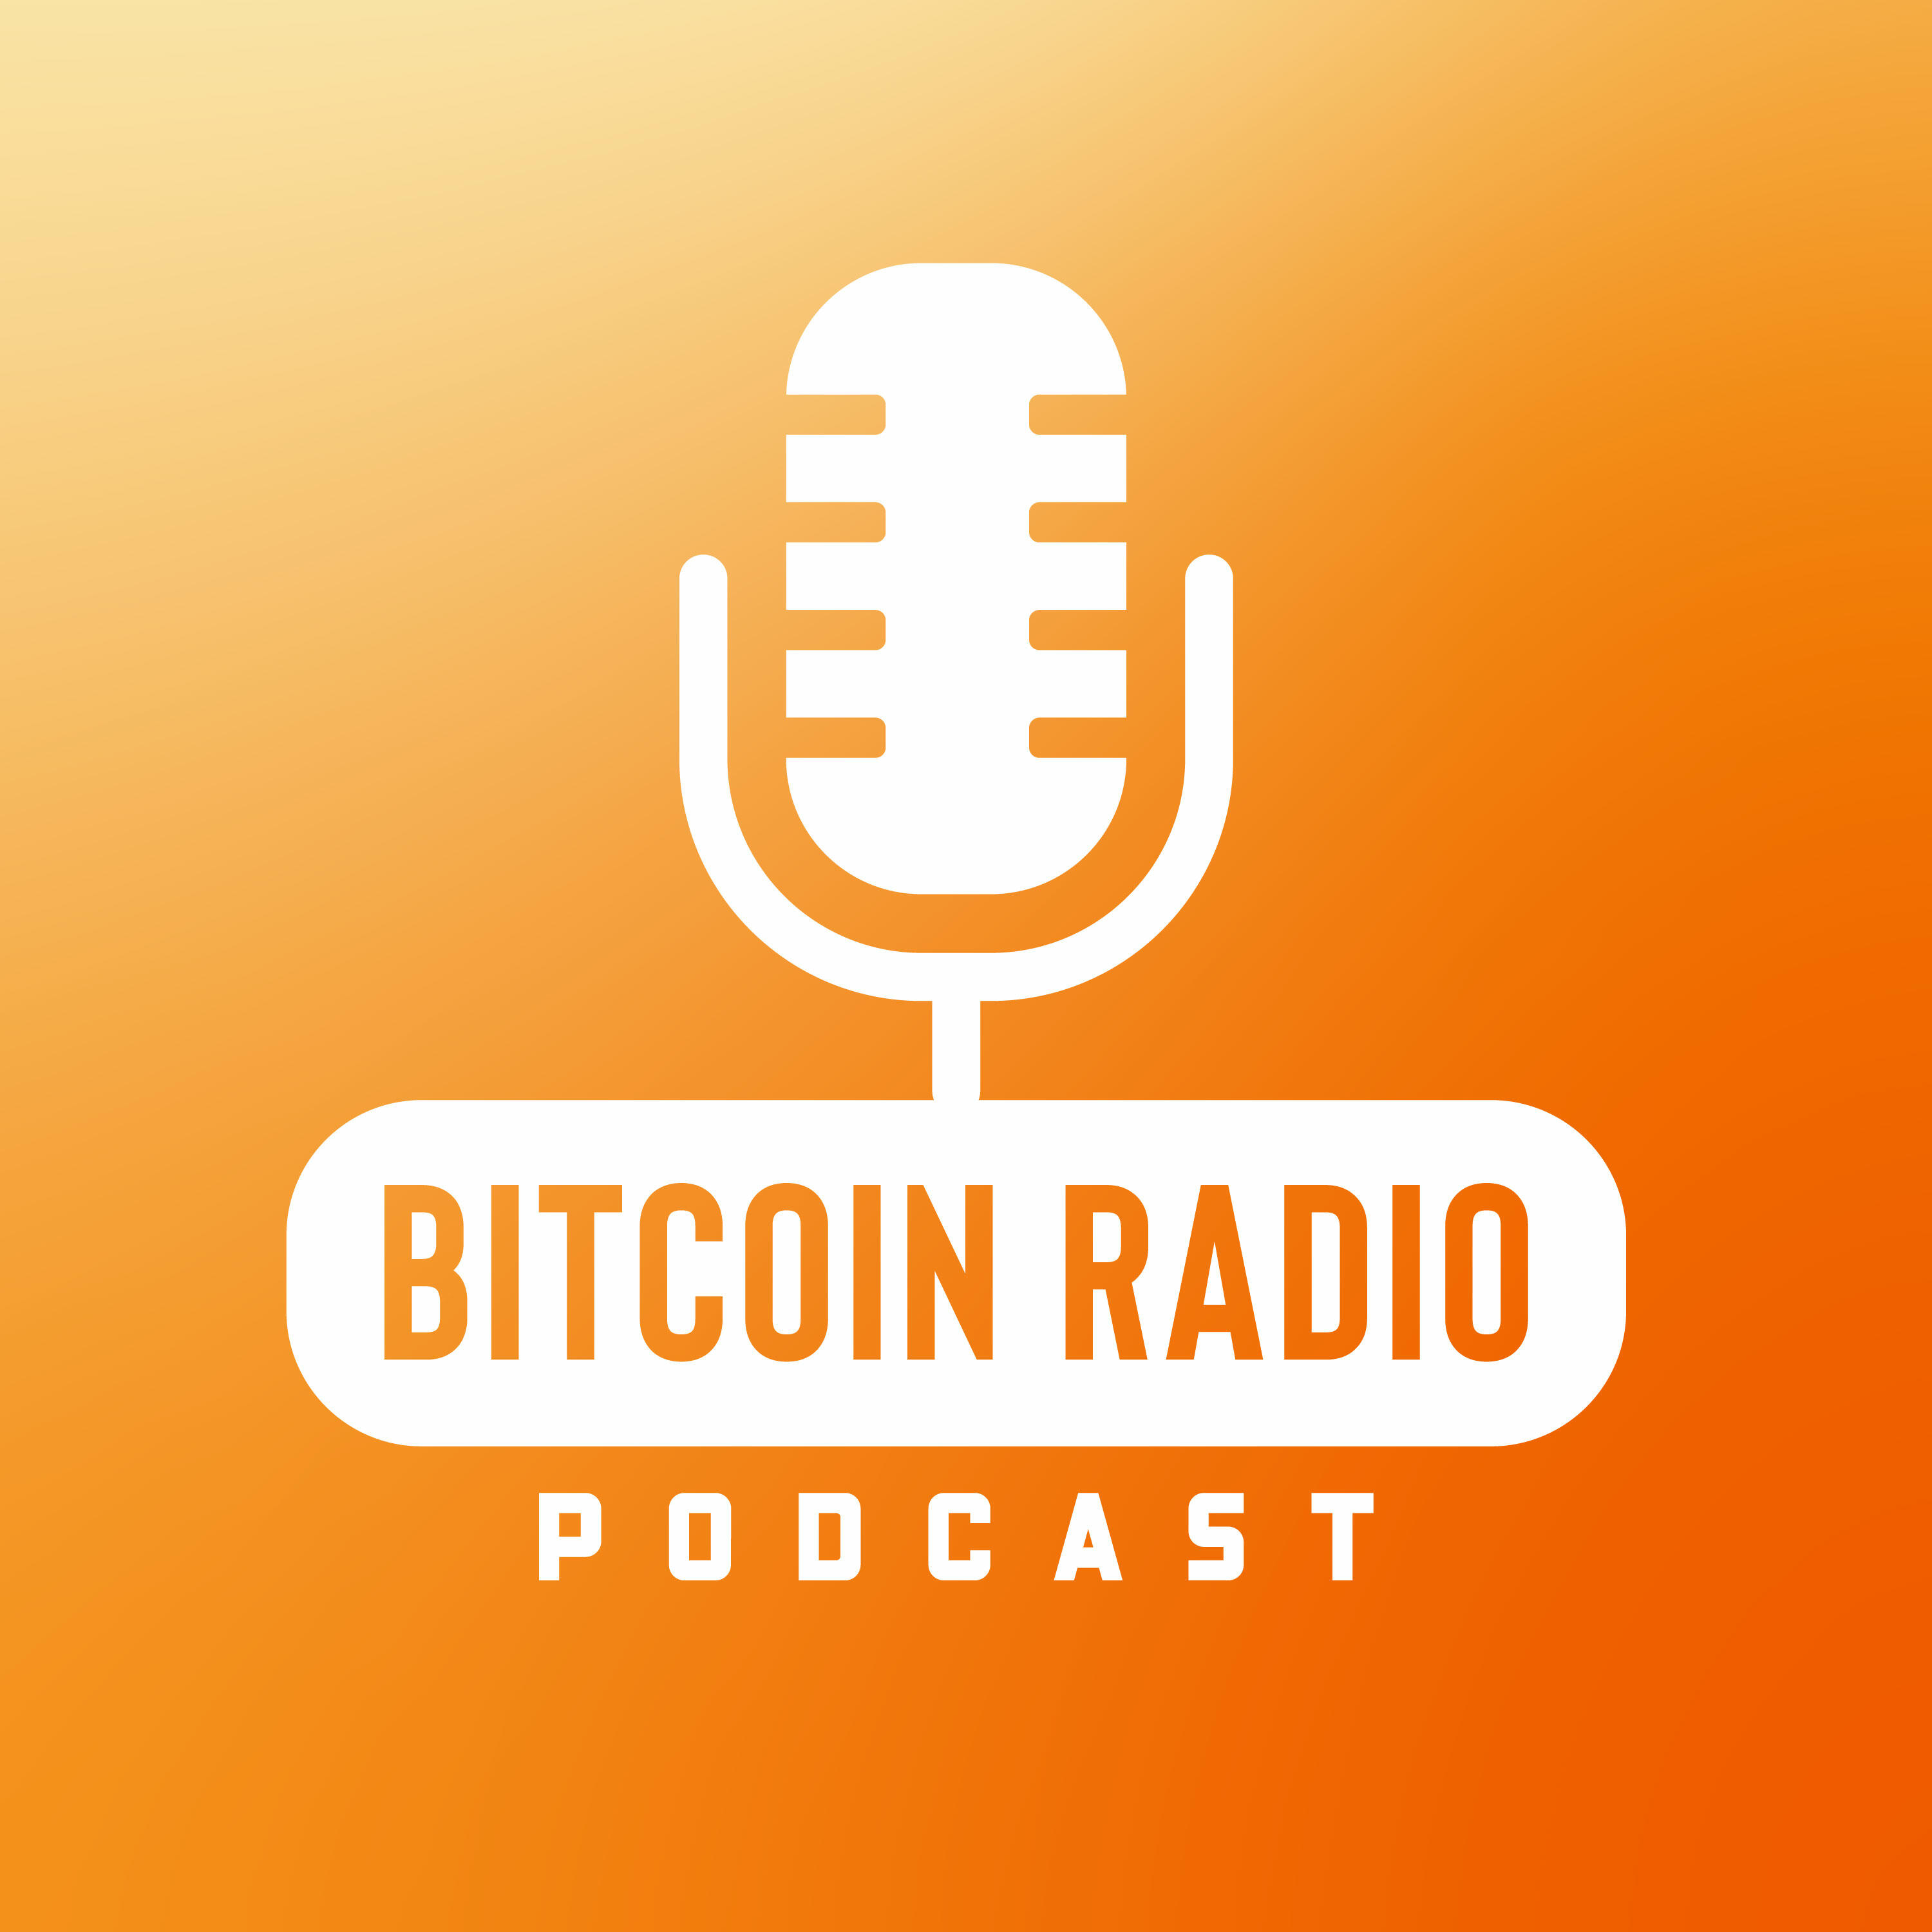 Bitcoin radio mohegan sun sportsbook app